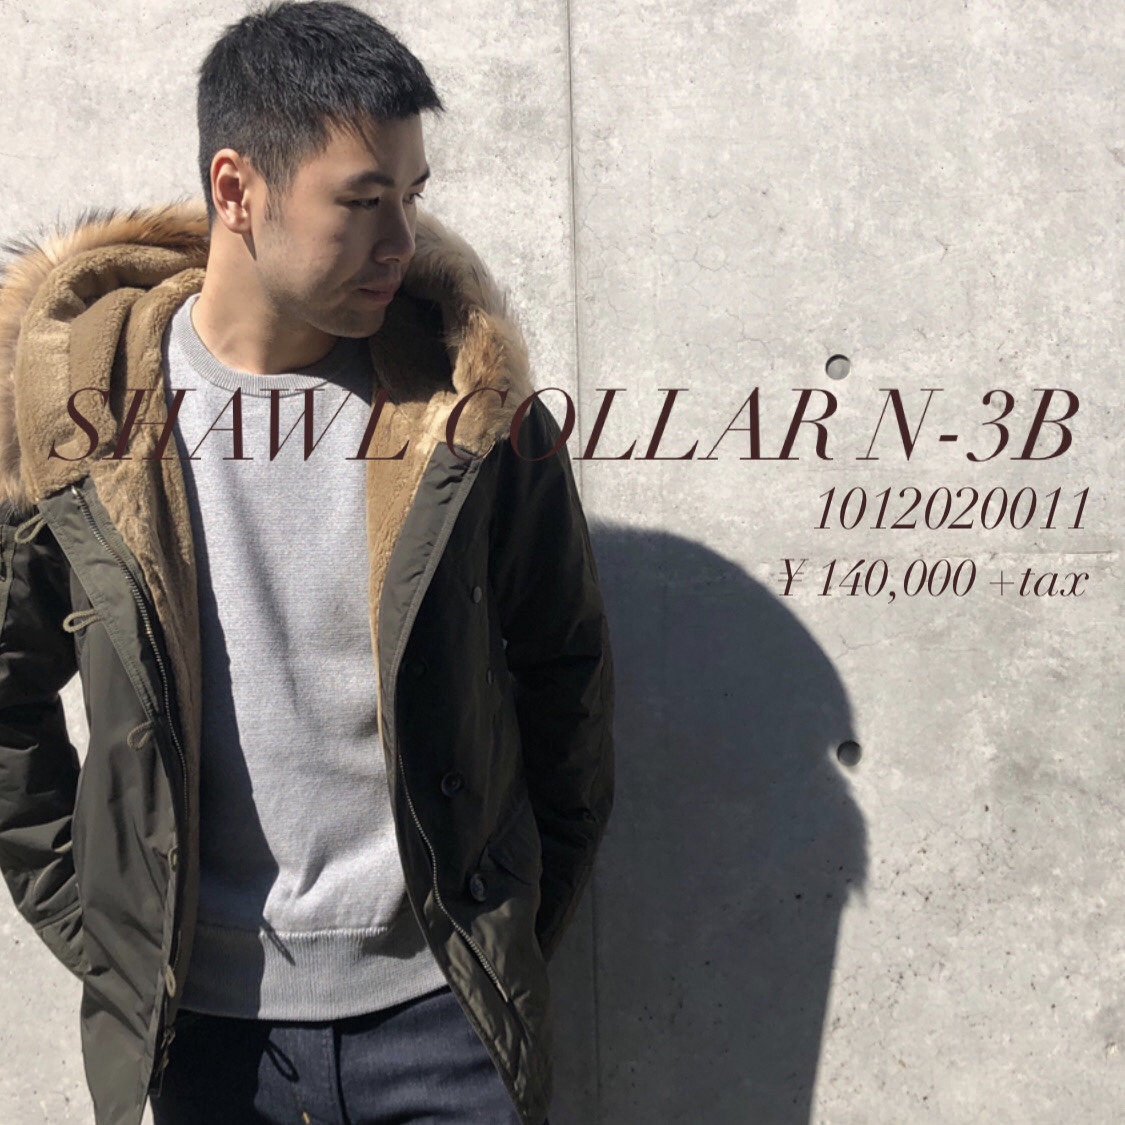 SHAWL COLLAR N-3B coordinate | junhashimoto